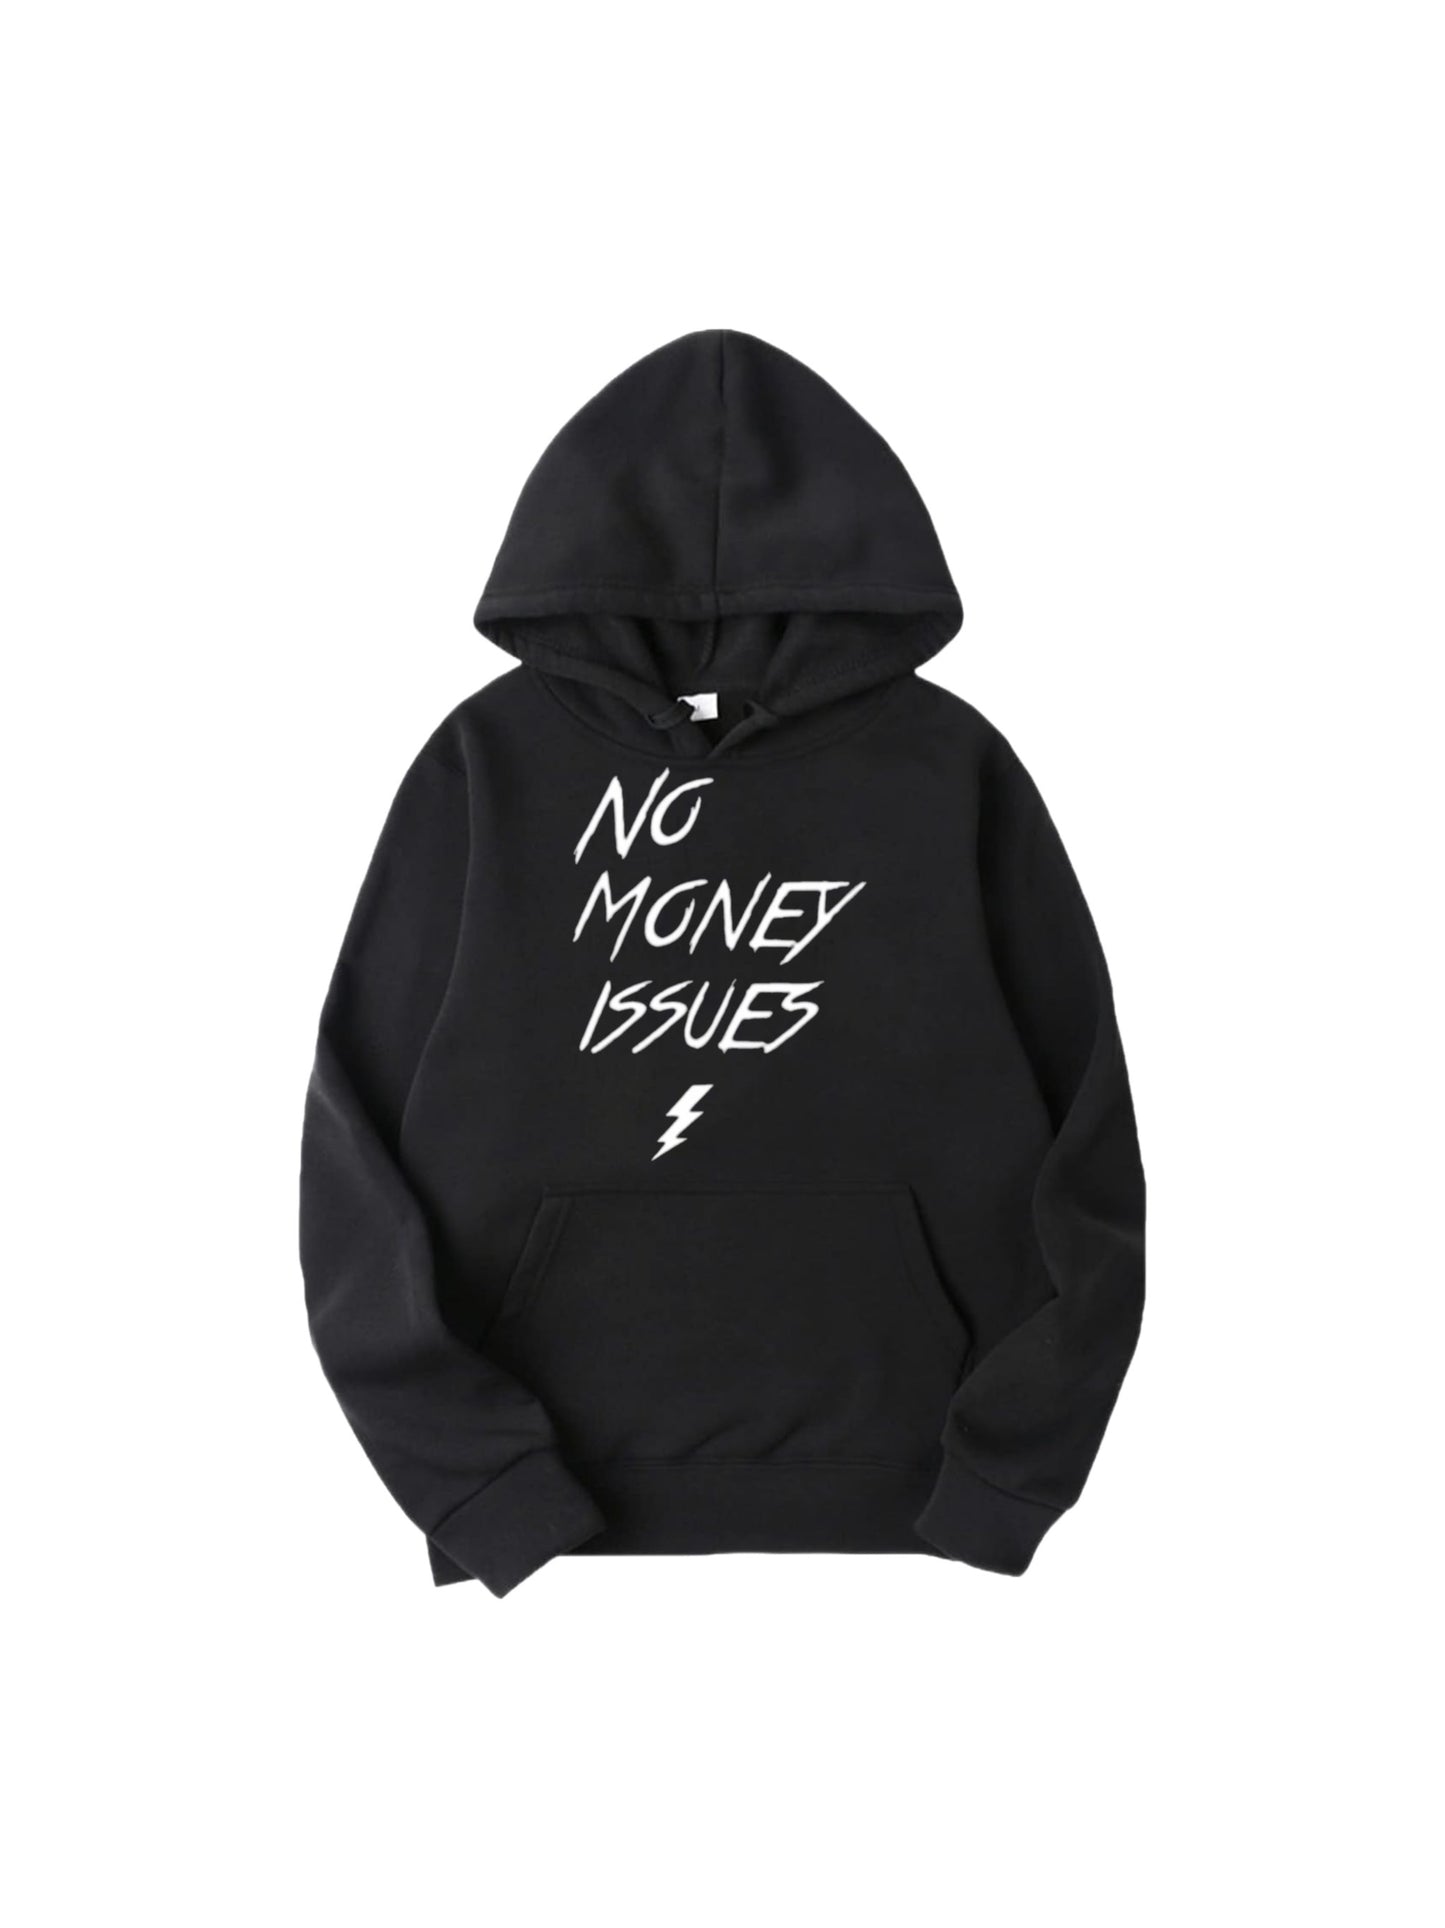 No money Issues hoodies